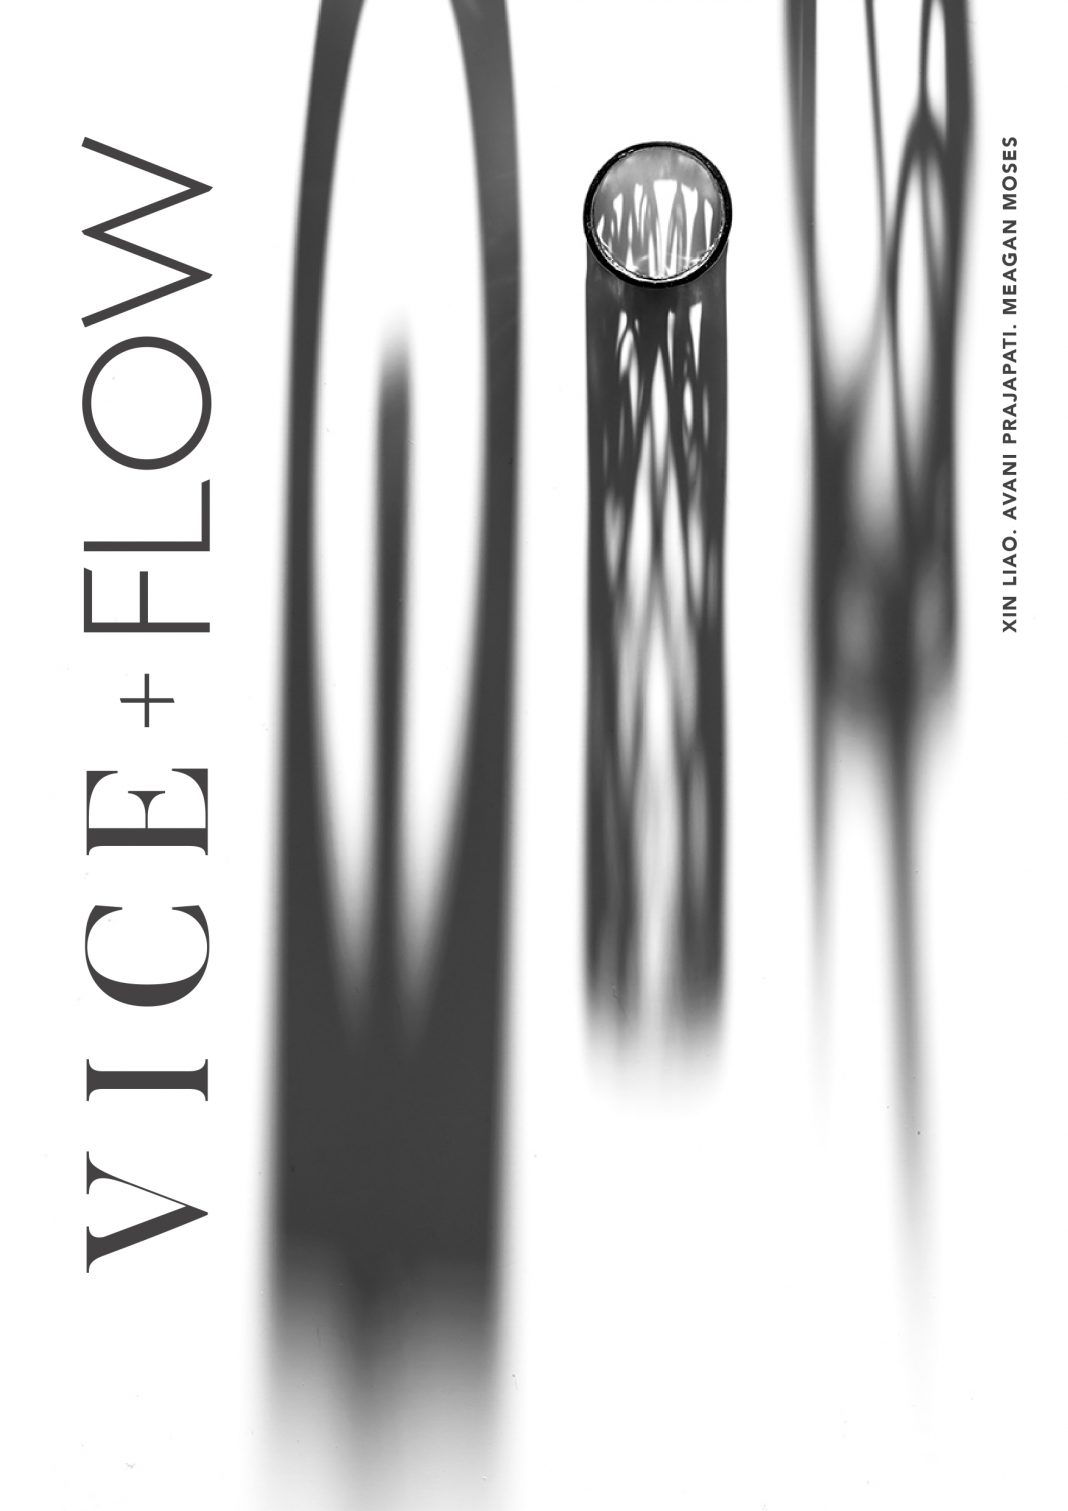 Vice + Flow. Jewelry Exhibitionhttps://www.exibart.com/repository/media/eventi/2019/04/vice-flow.-jewelry-exhibition-1068x1511.jpg